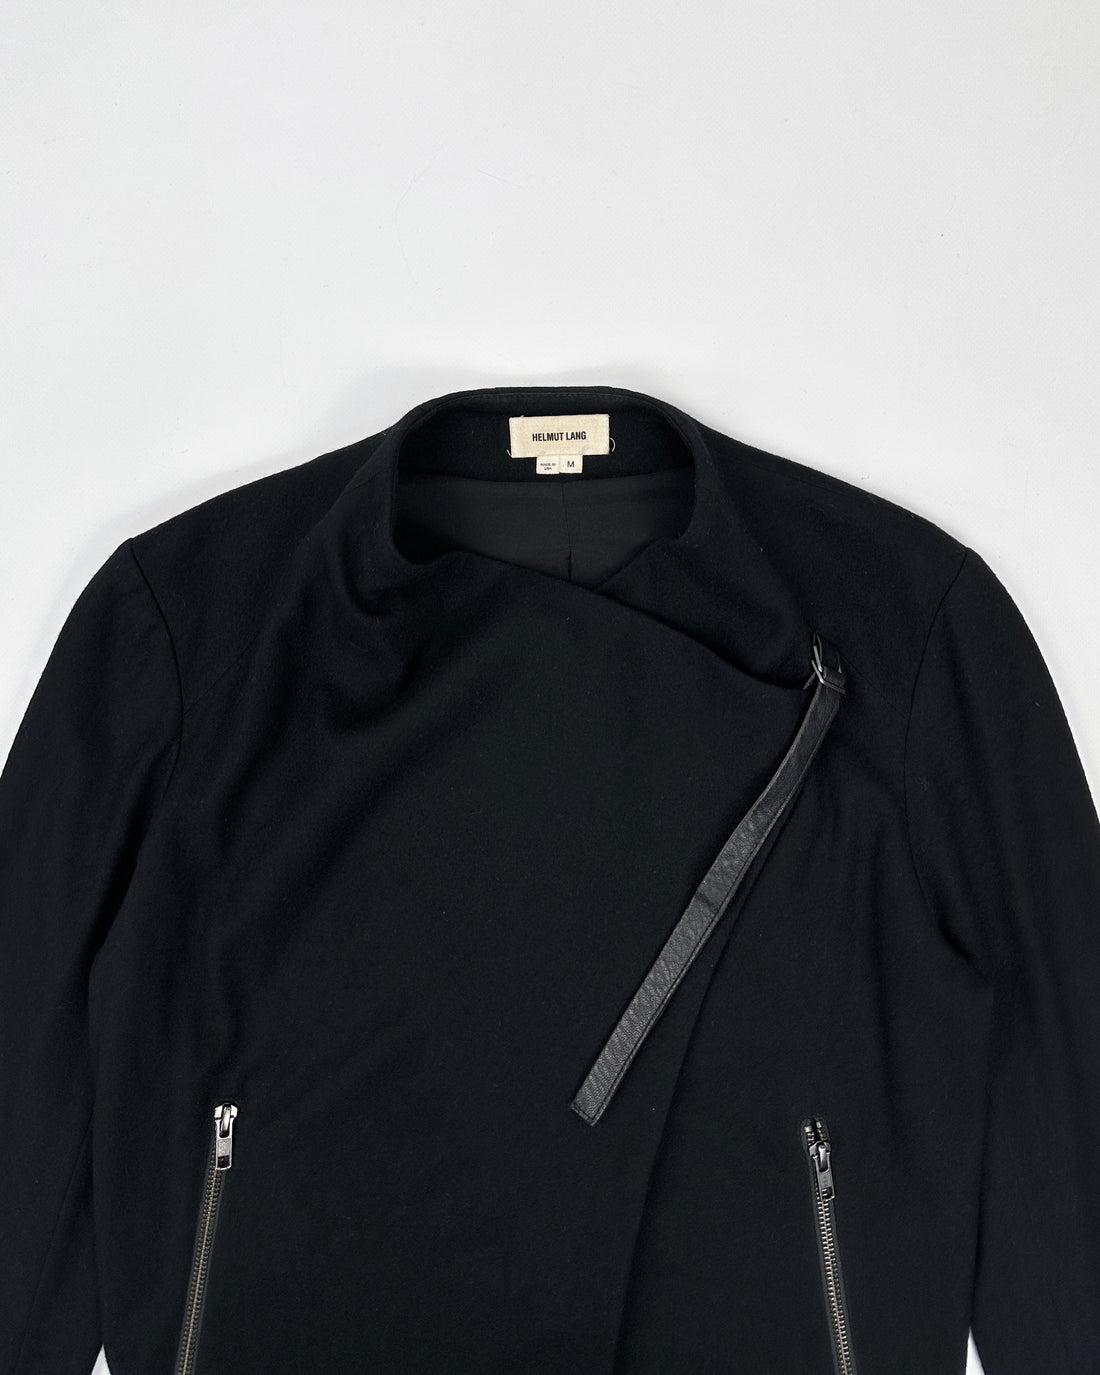 Helmut Lang Leather Strap Black Wool Jacket 1990's